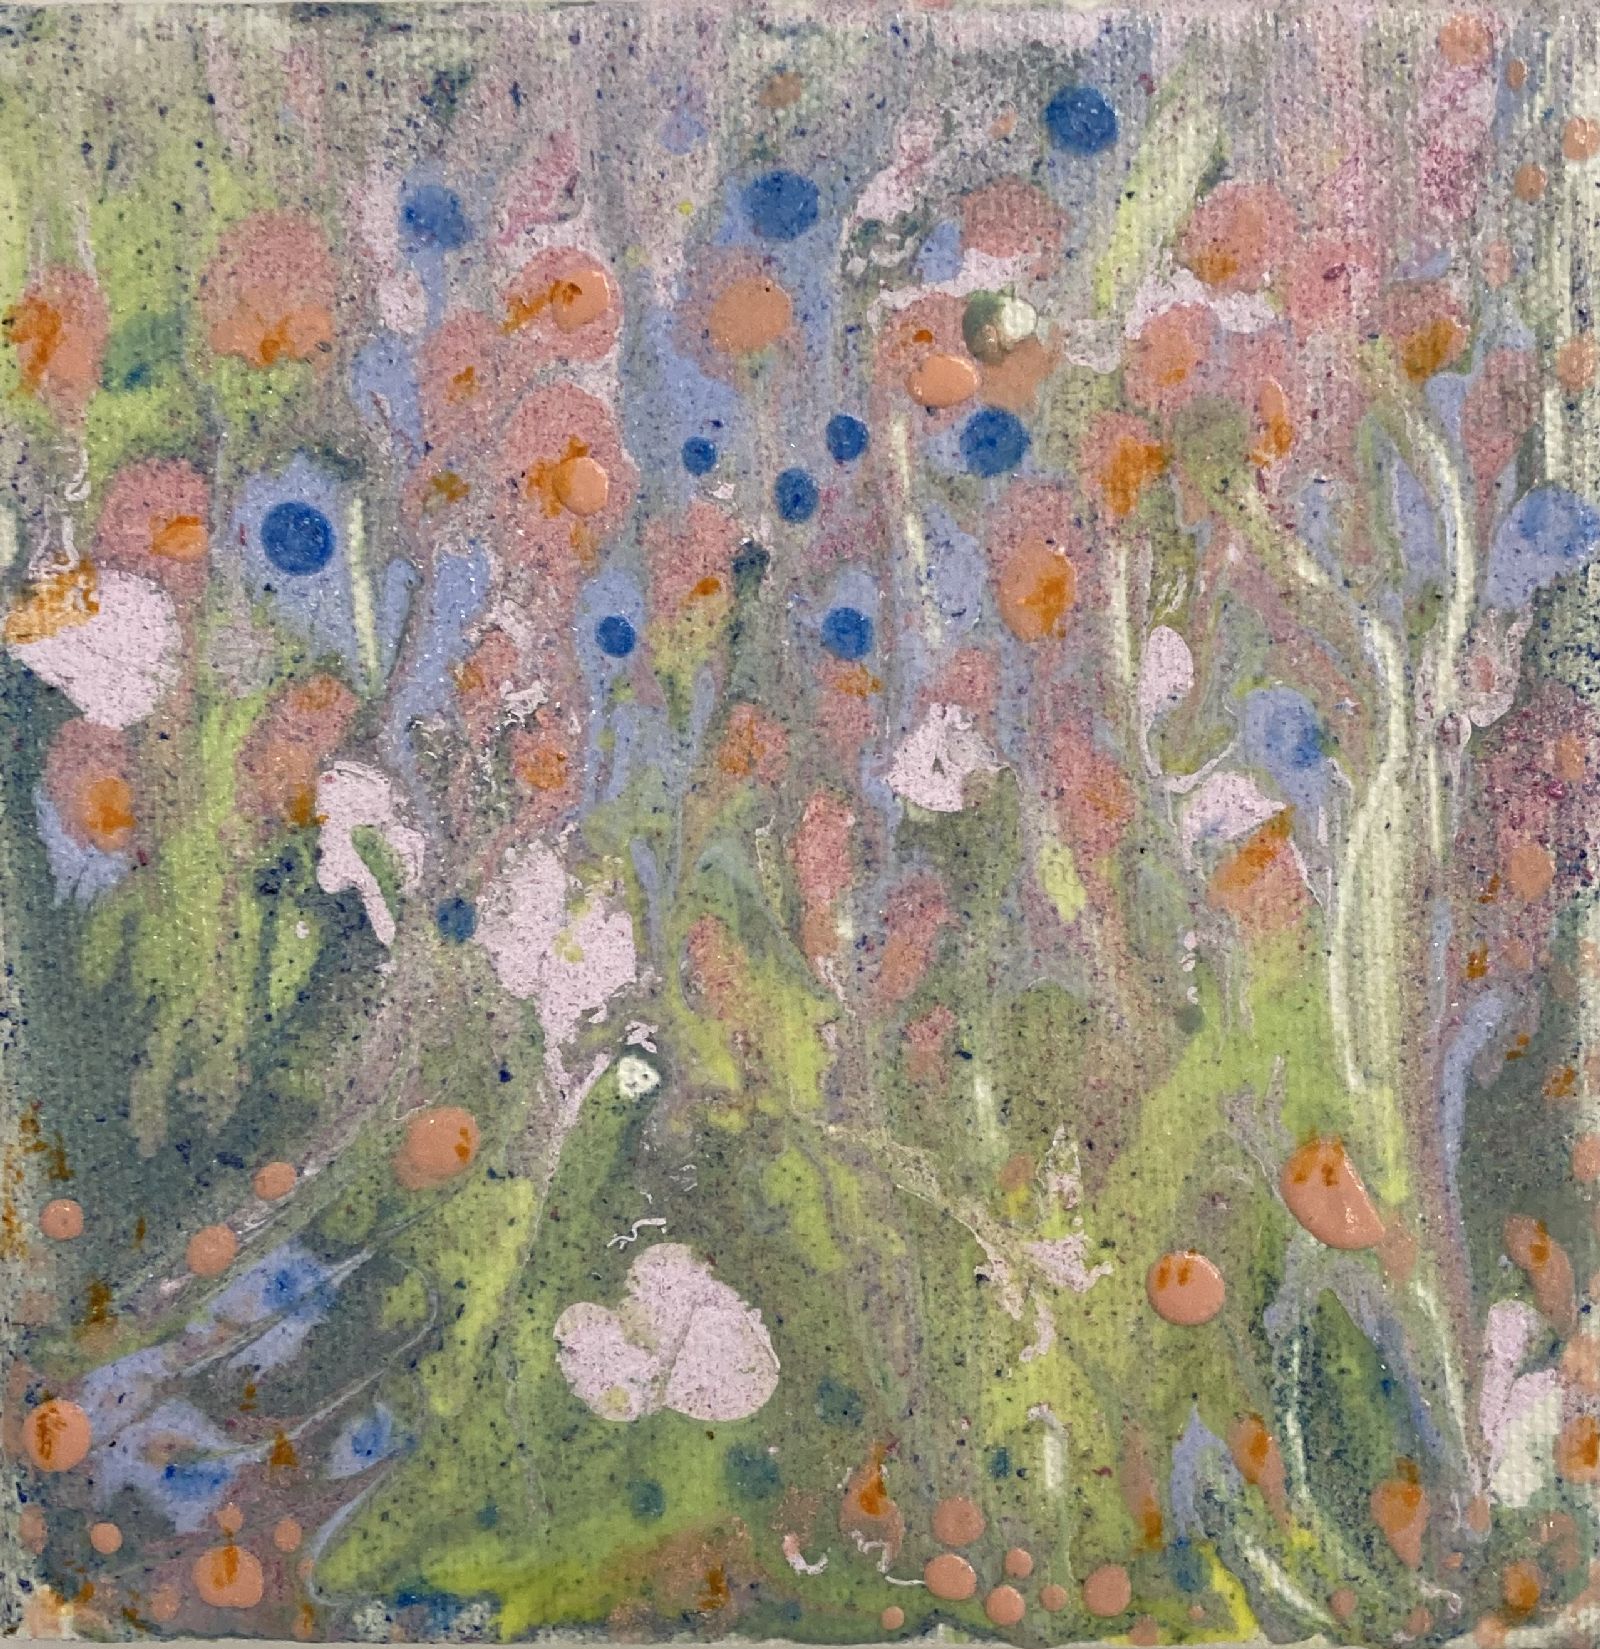 Summer wild flowers medow 1 by Bernadette Heenan